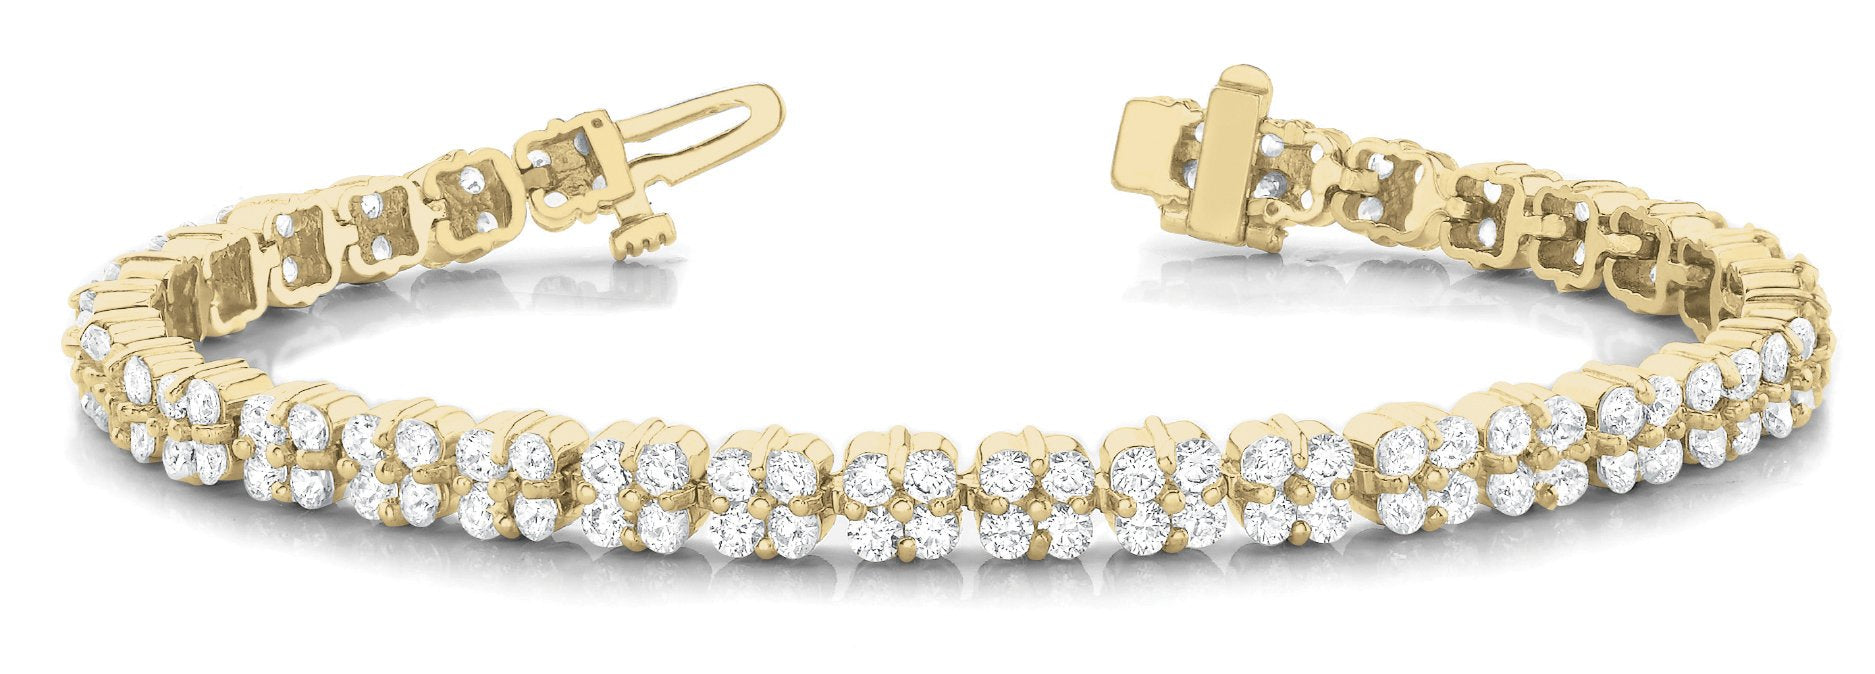 Fancy Diamond Bracelet Ladies 4.28ct tw - 14kt Yellow Gold